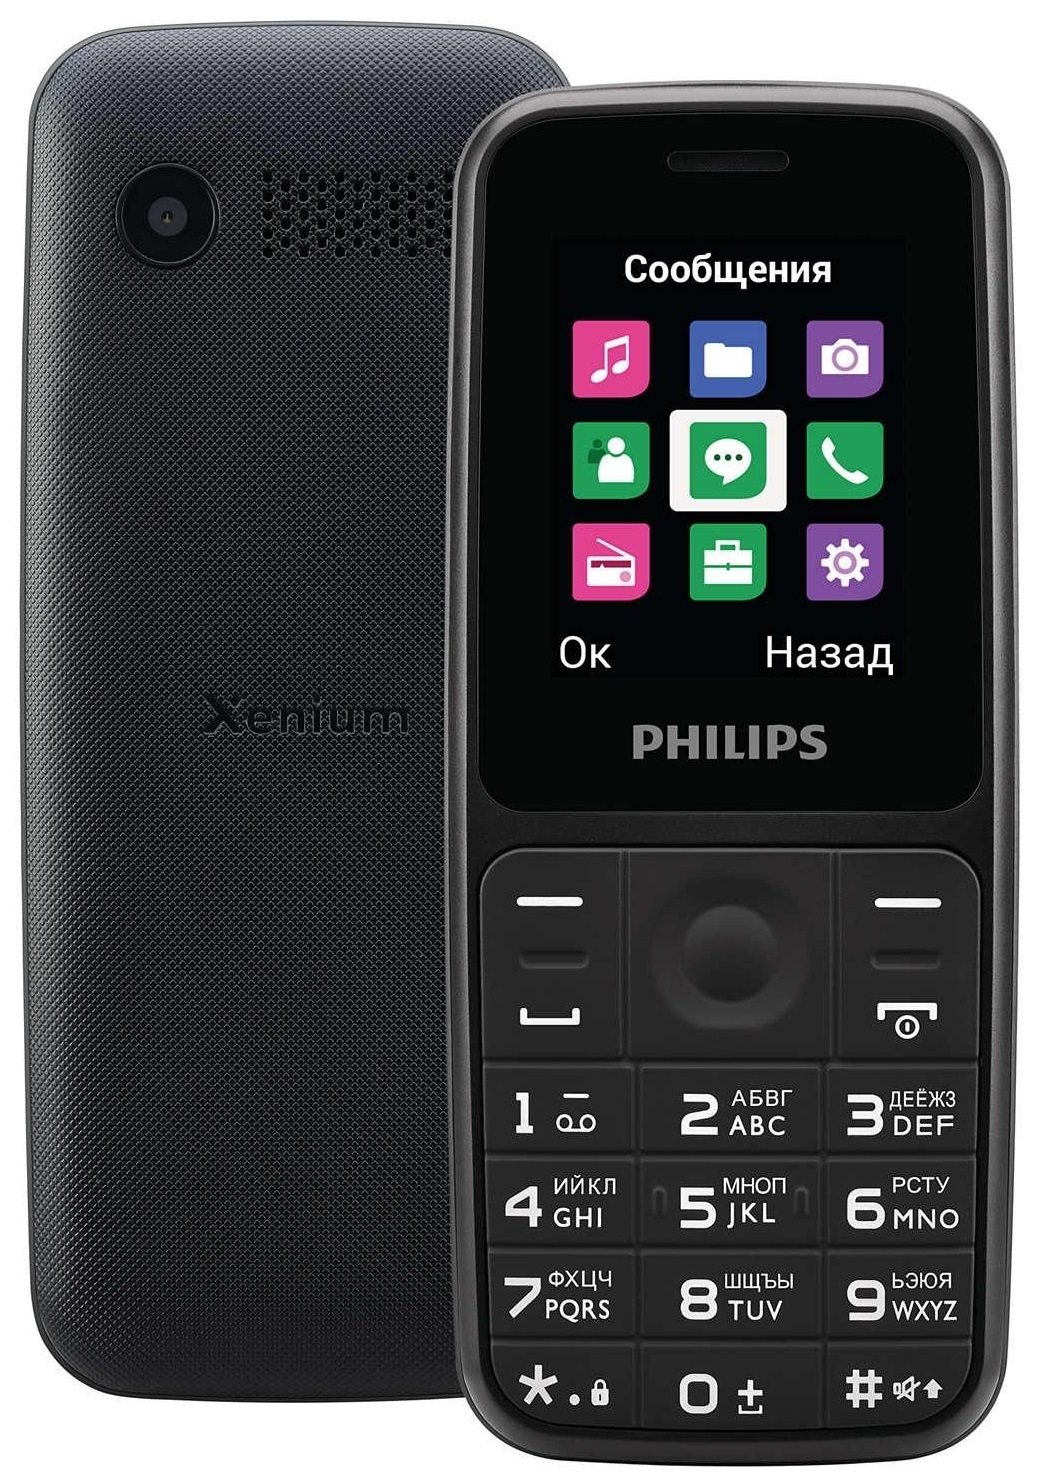 Philips Xenium E125